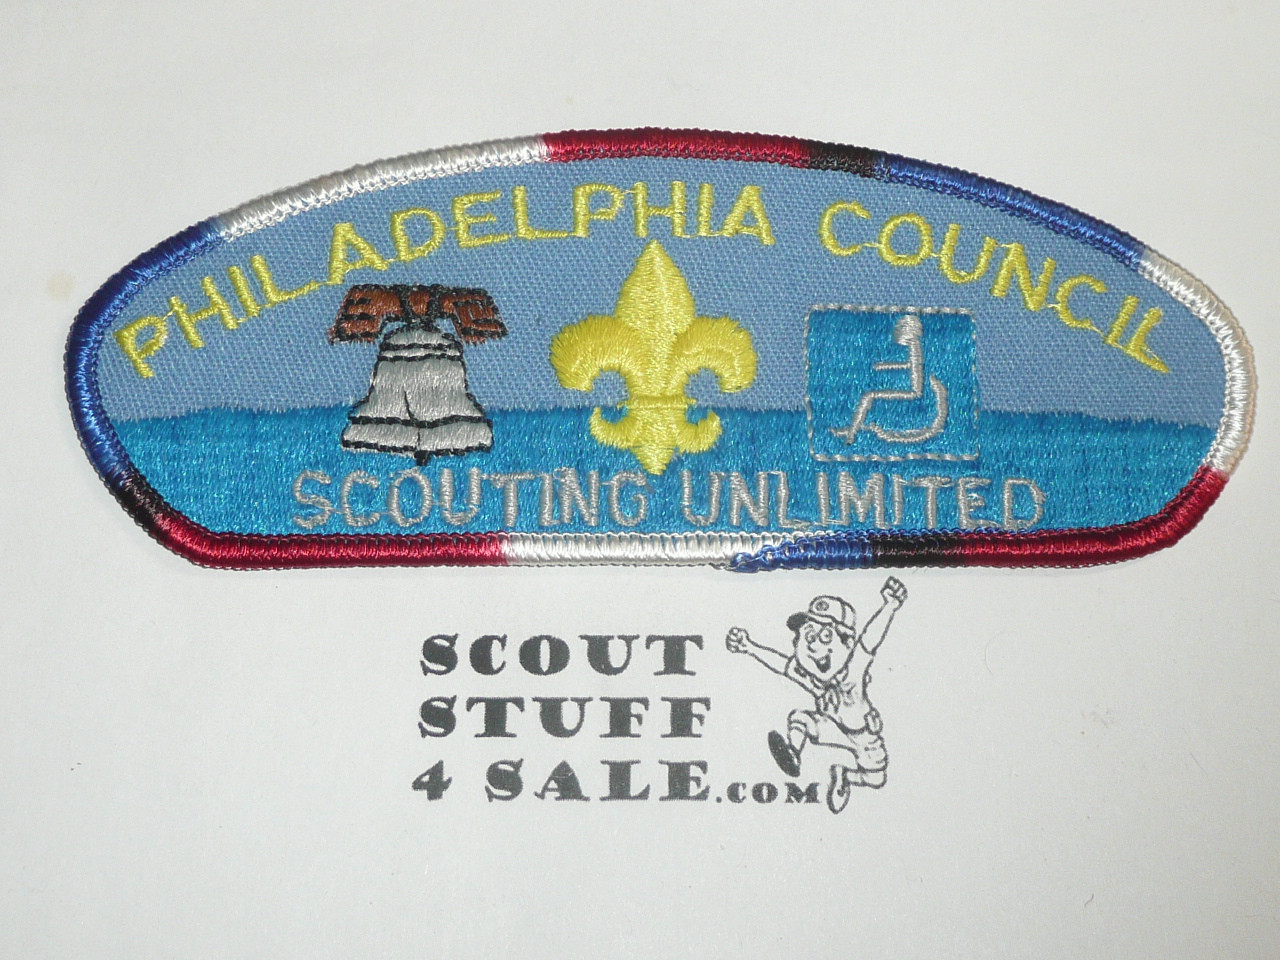 Philadelphia Council ta9 CSP - Scout